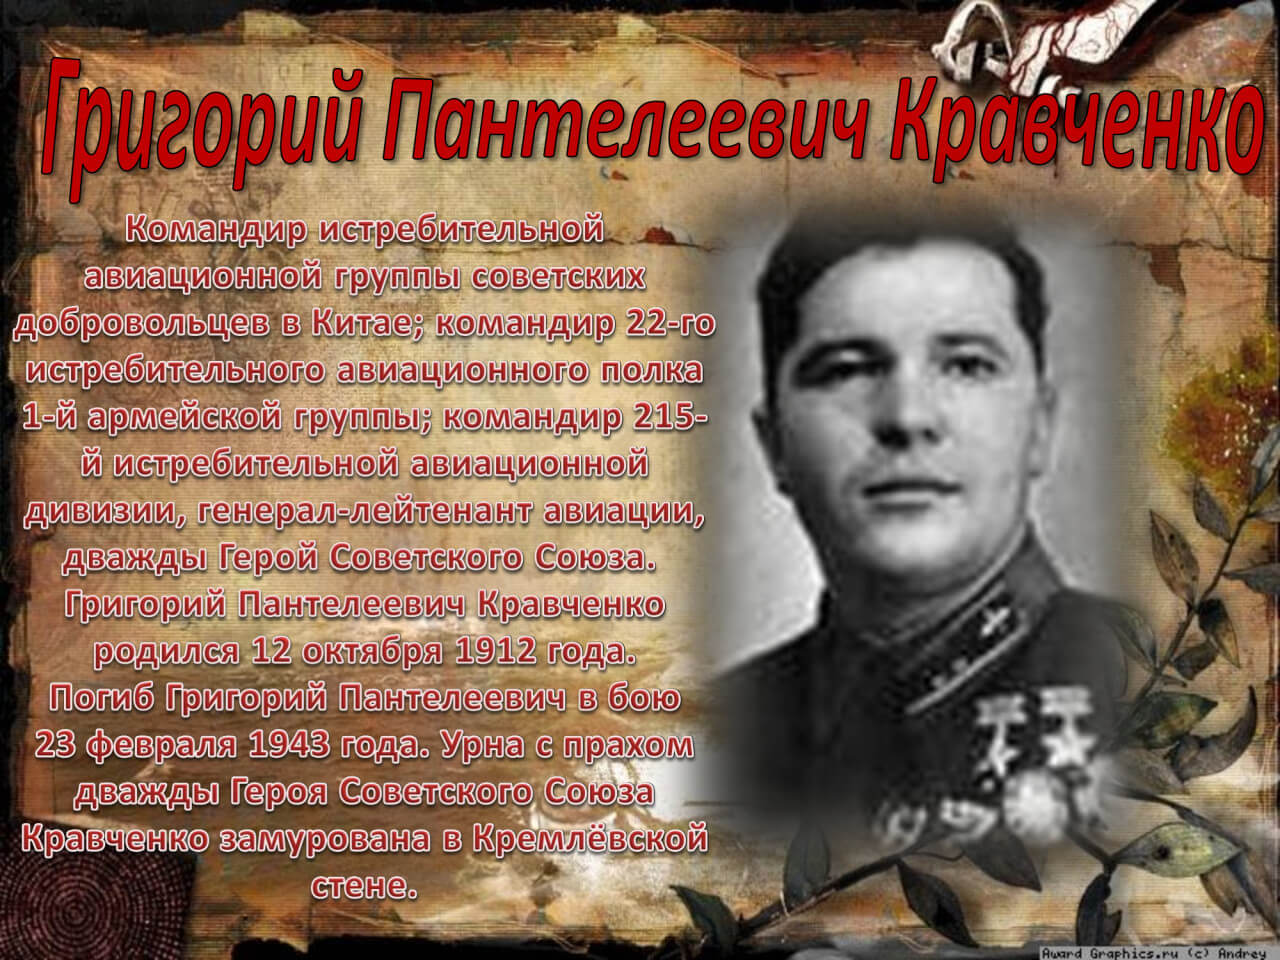 Григорий Пантелеевич Кравченко